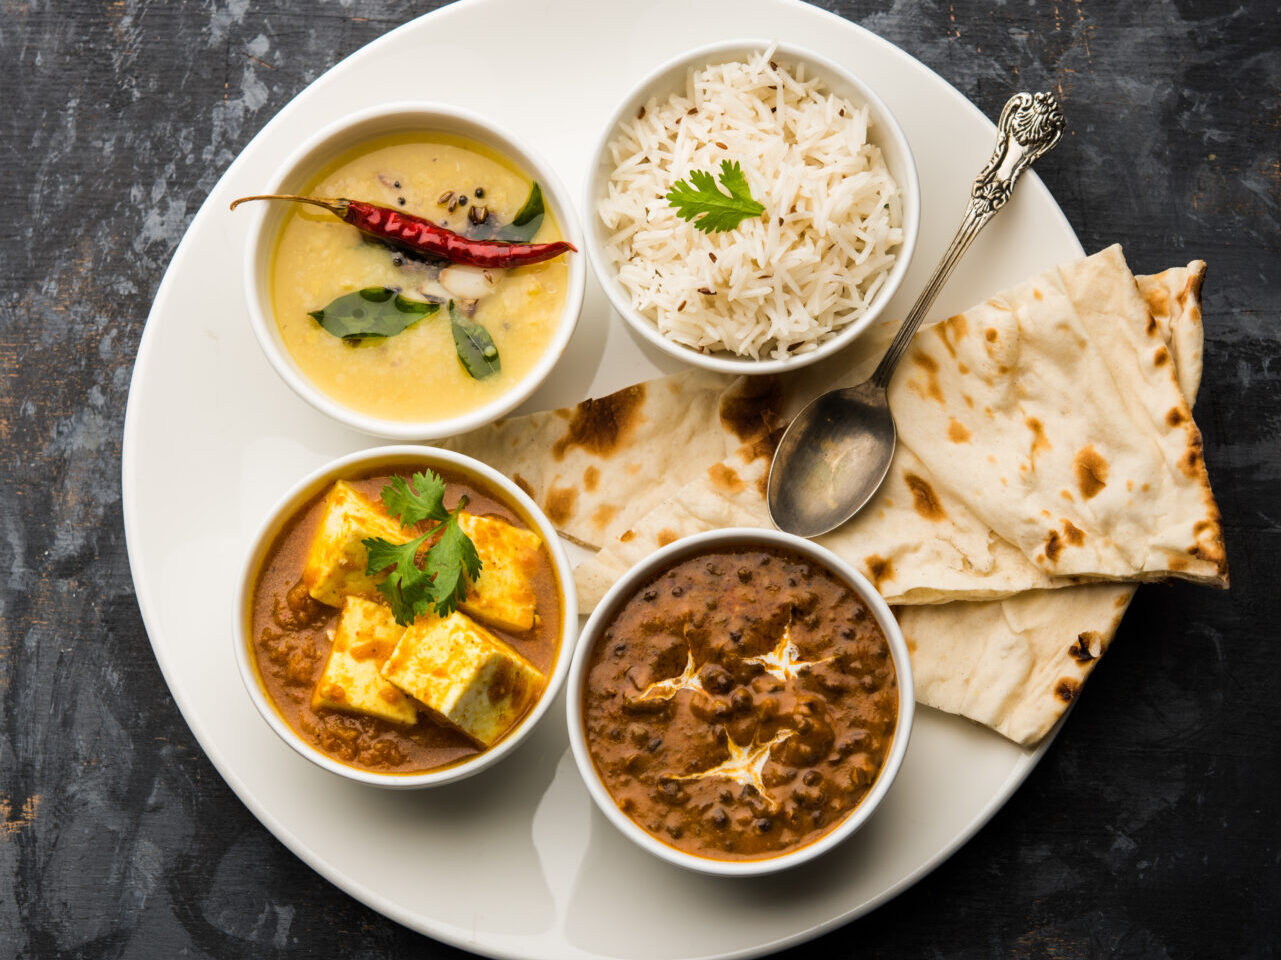 North Indian food platter or thali